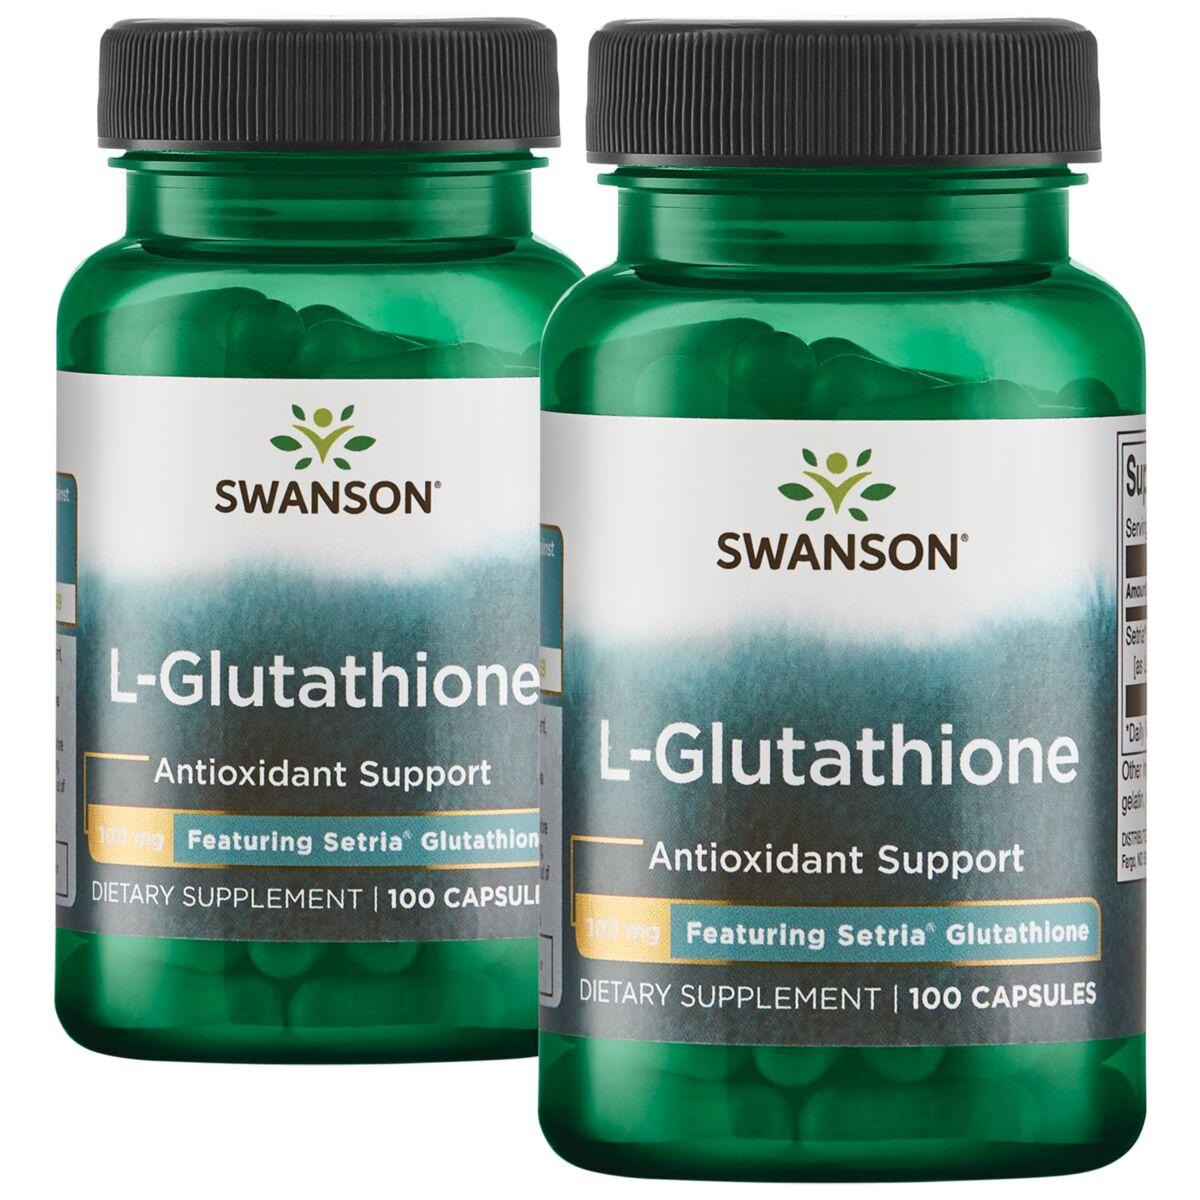 Swanson Premium L-Glutathione - Featuring Setria Glutathione 2 Pack Supplement Vitamin 100 mg 100 Caps Per Bottle